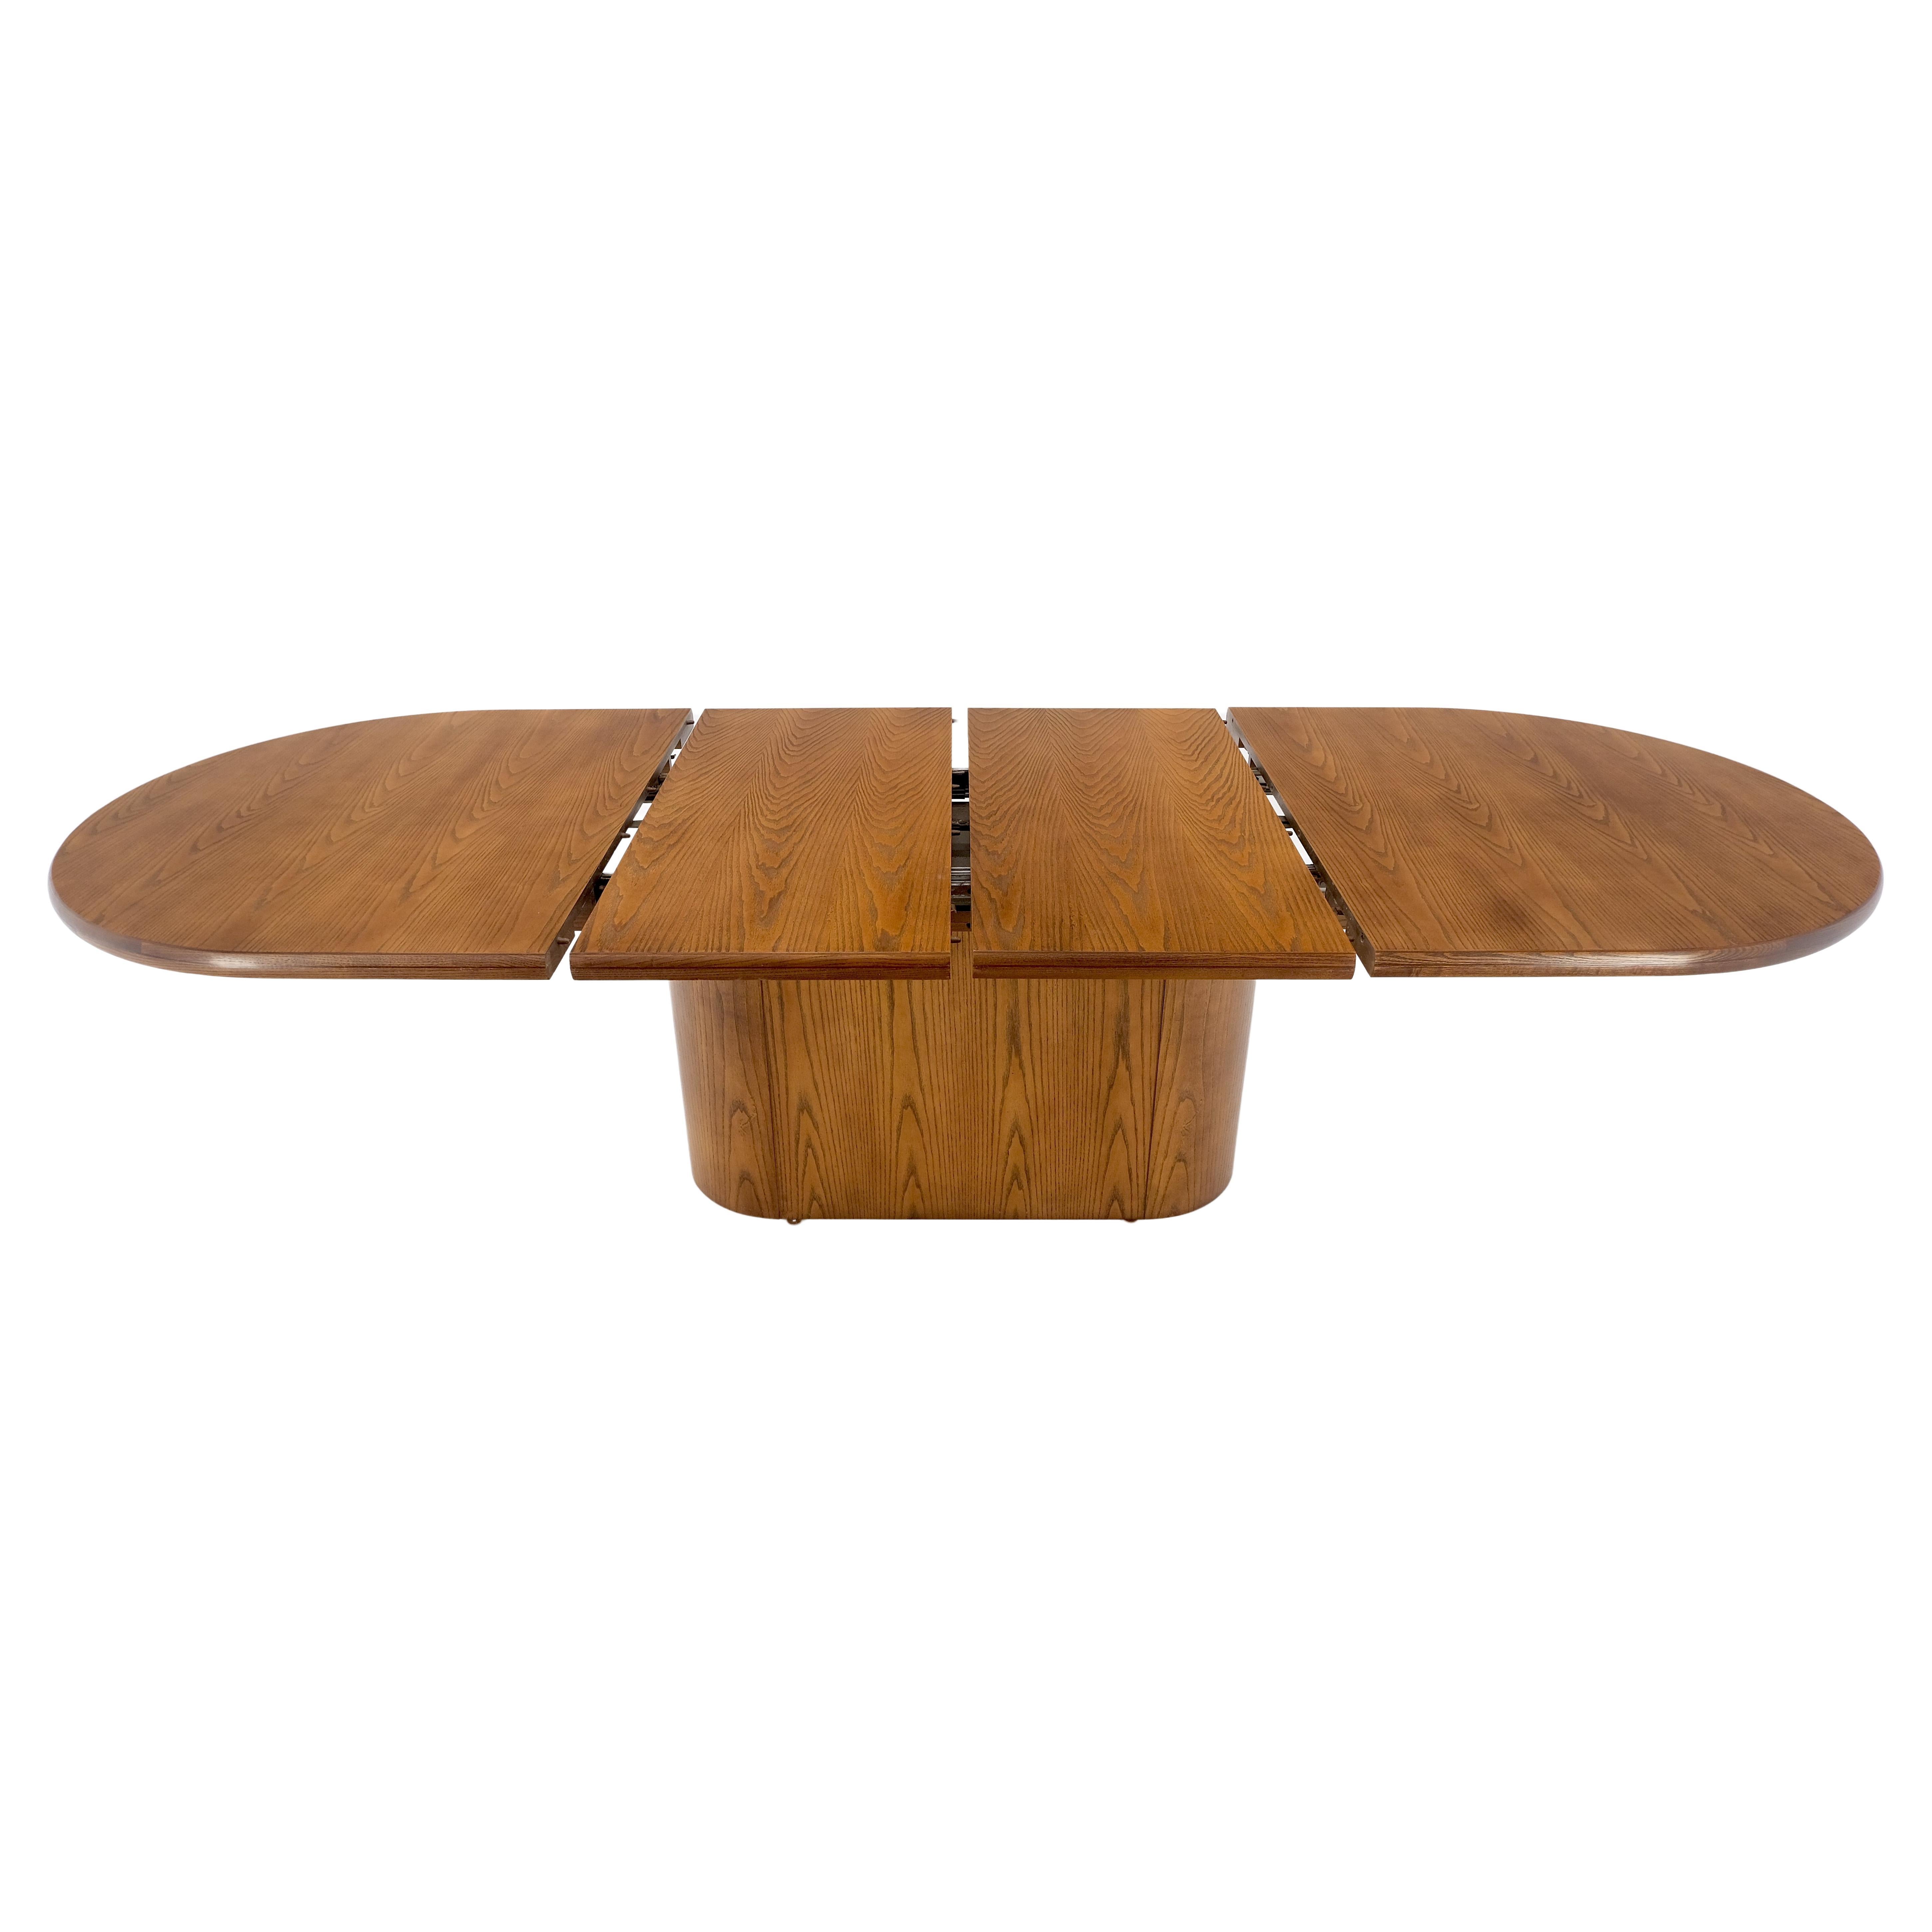 Single Pedestal Base Oval racetrack Shape Two Leaves Cerused Oak Dining Table  For Sale